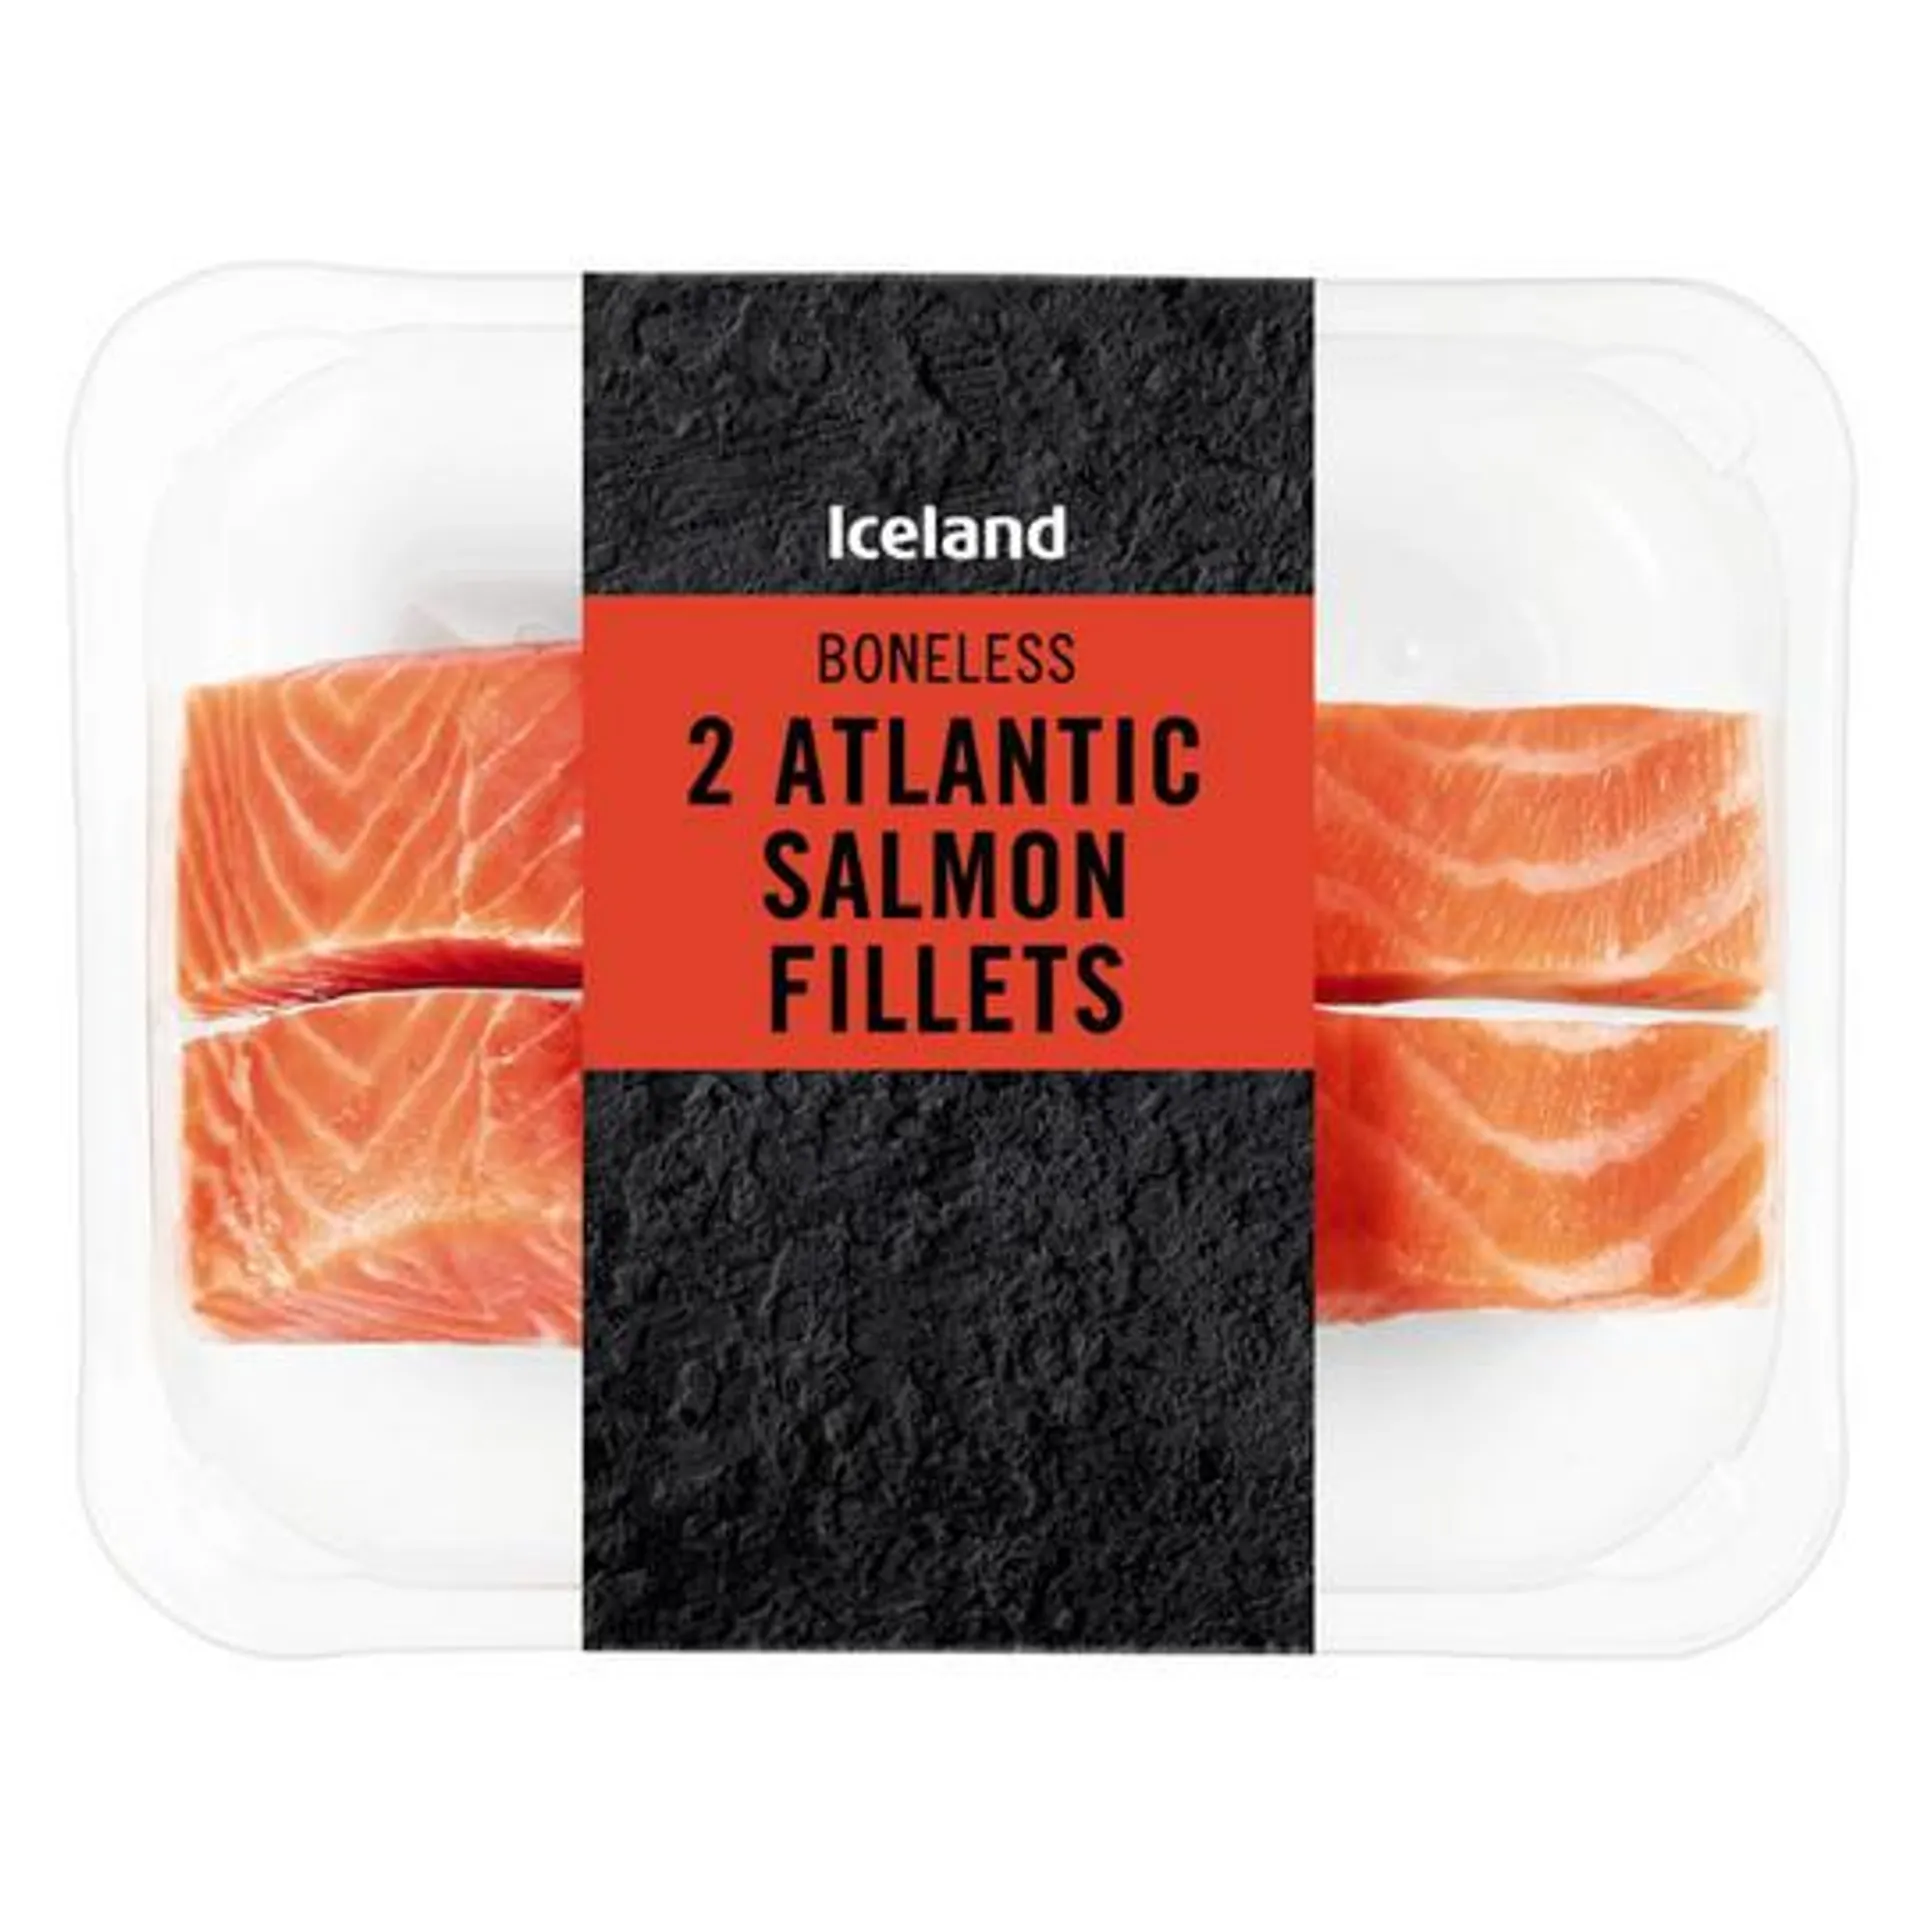 Iceland Boneless 2 Atlantic Salmon Fillets 220g